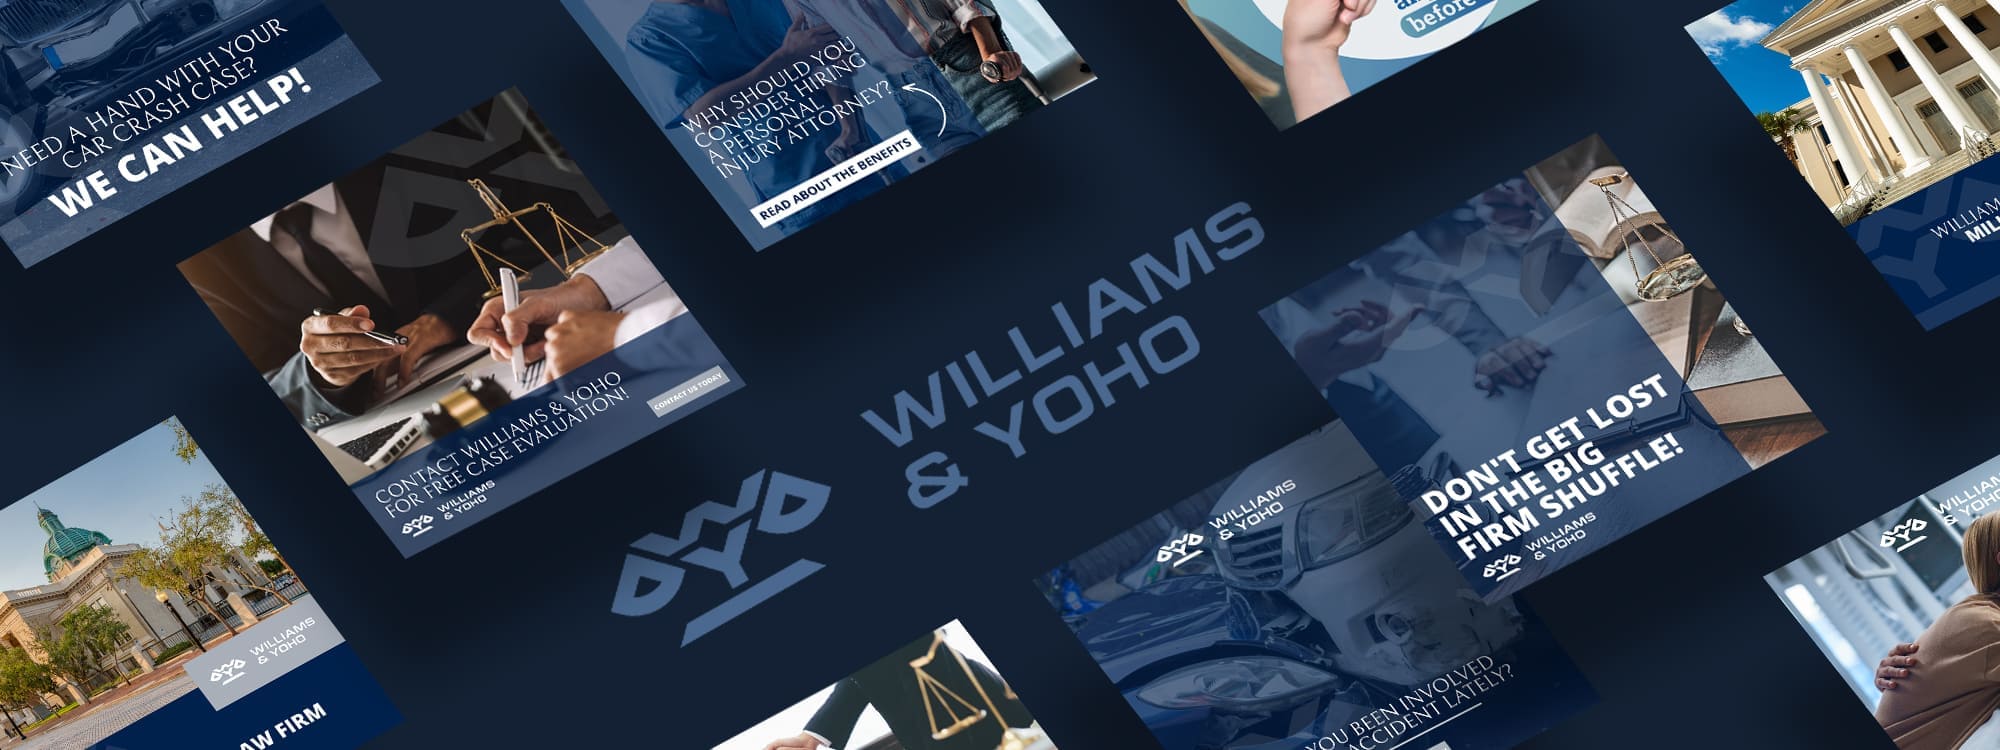 Williams & Yoho